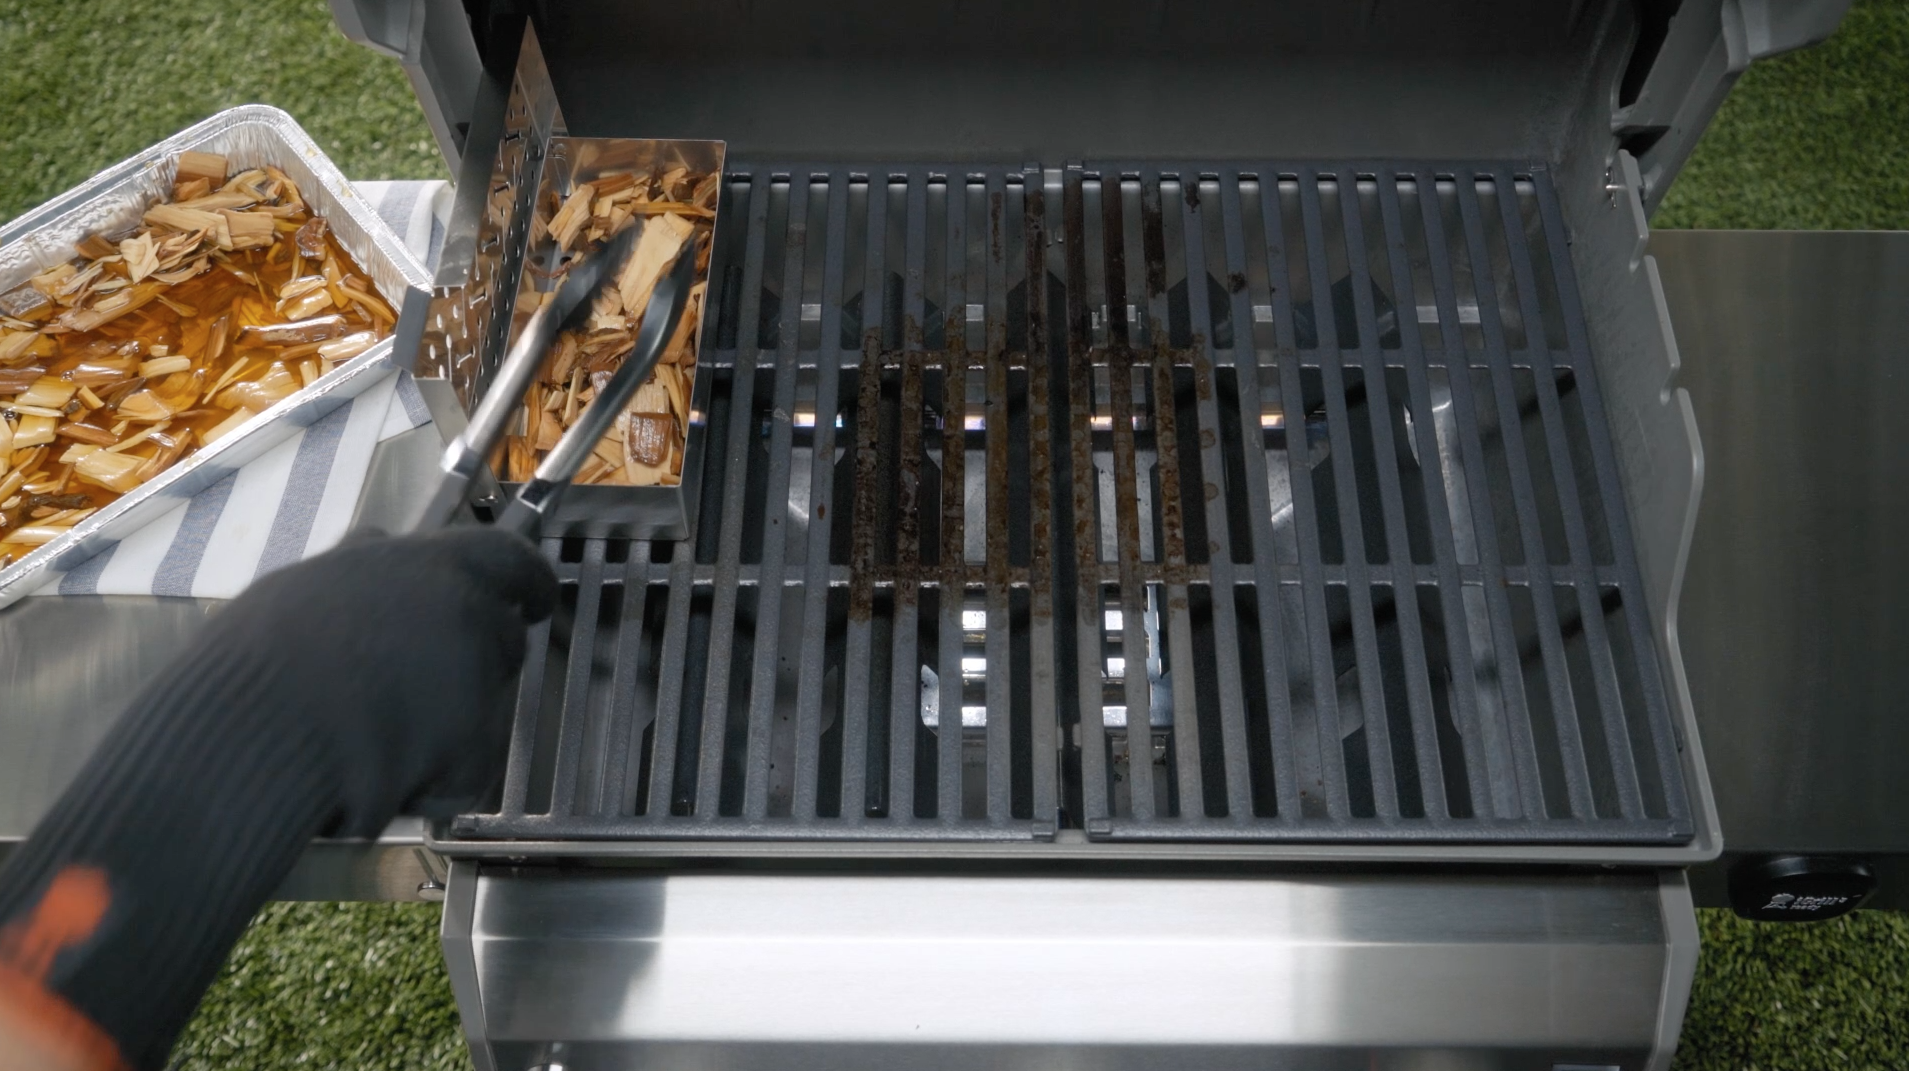 brine turkey with smoker box on a gas grill